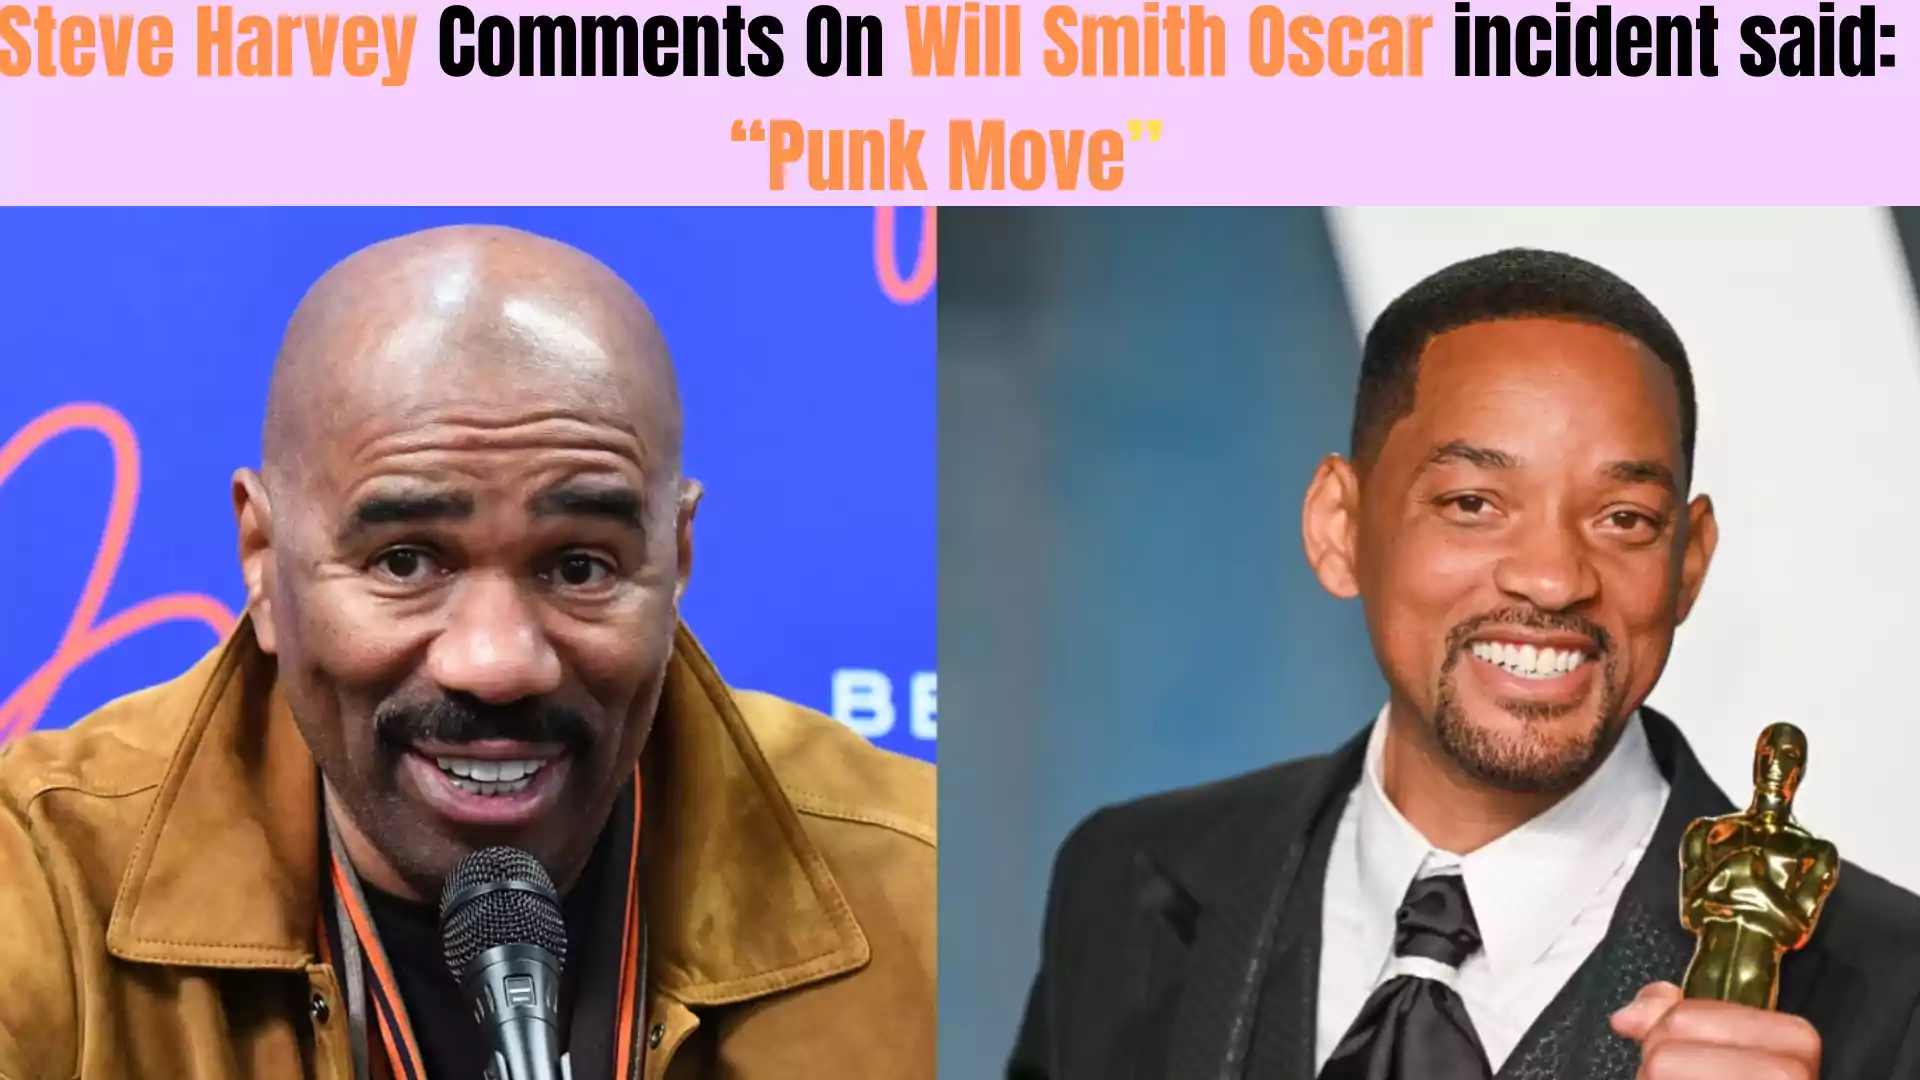 Steve Harvey Comments On Will Smith Oscar incident said: “Punk Move”